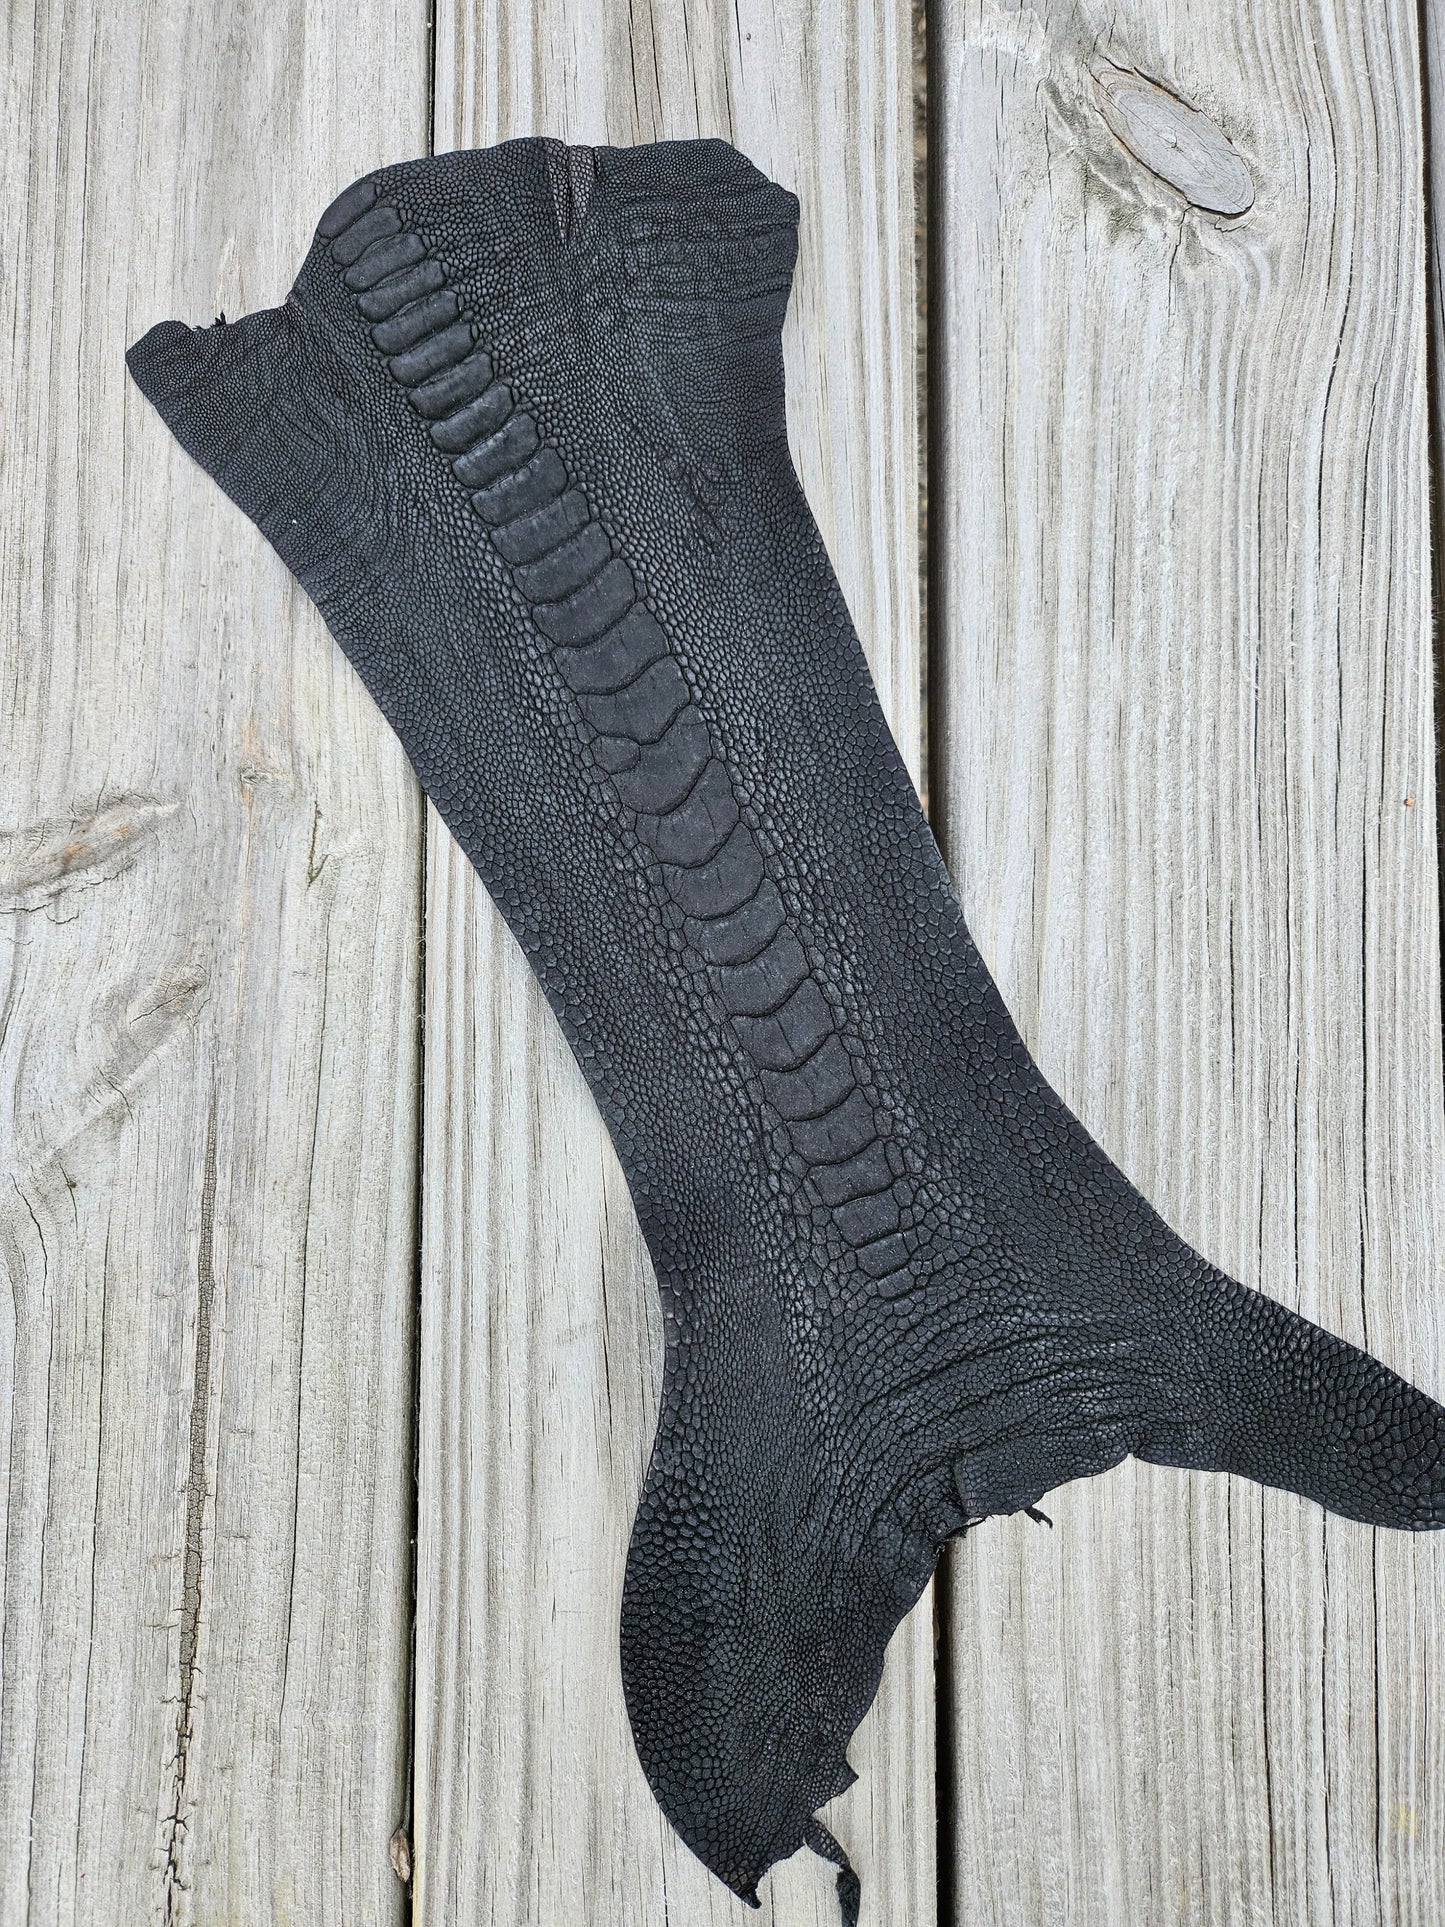 Ostrich Leg - Black Nubuck (Grade 1)